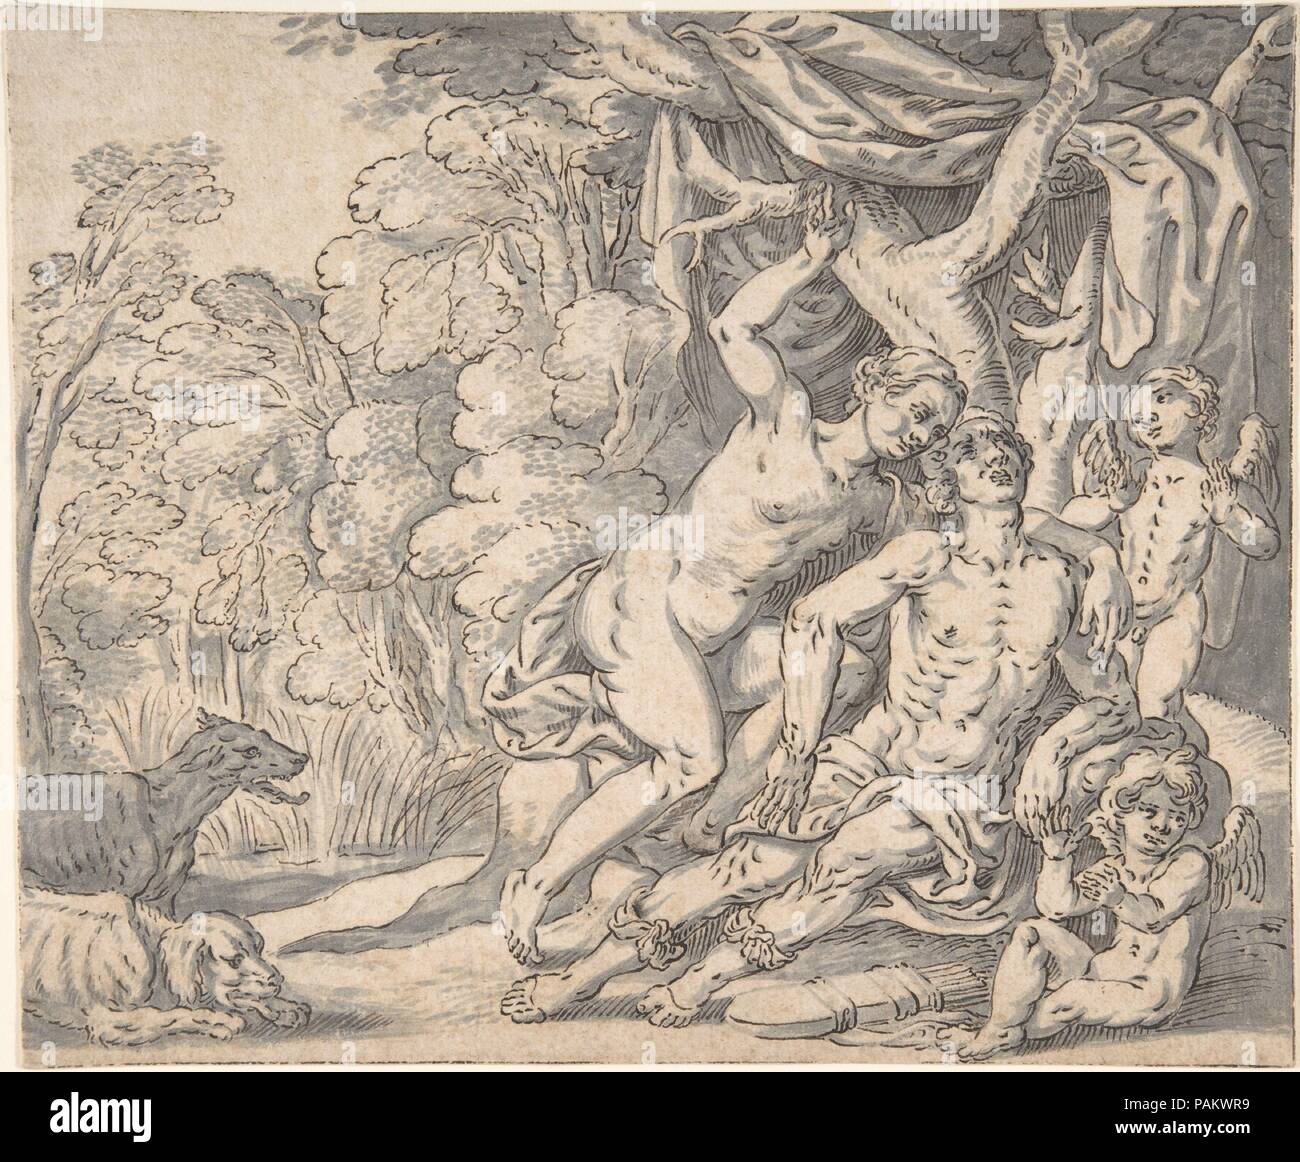 La mort d'Adonis. Artiste : Johann König (allemand, Nuremberg Nuremberg 1586-1642). Fiche technique : Dimensions : 7 1/2 x 9 in. (19 x 22,9 cm). Date : ca. 1625. Musée : Metropolitan Museum of Art, New York, USA. Banque D'Images